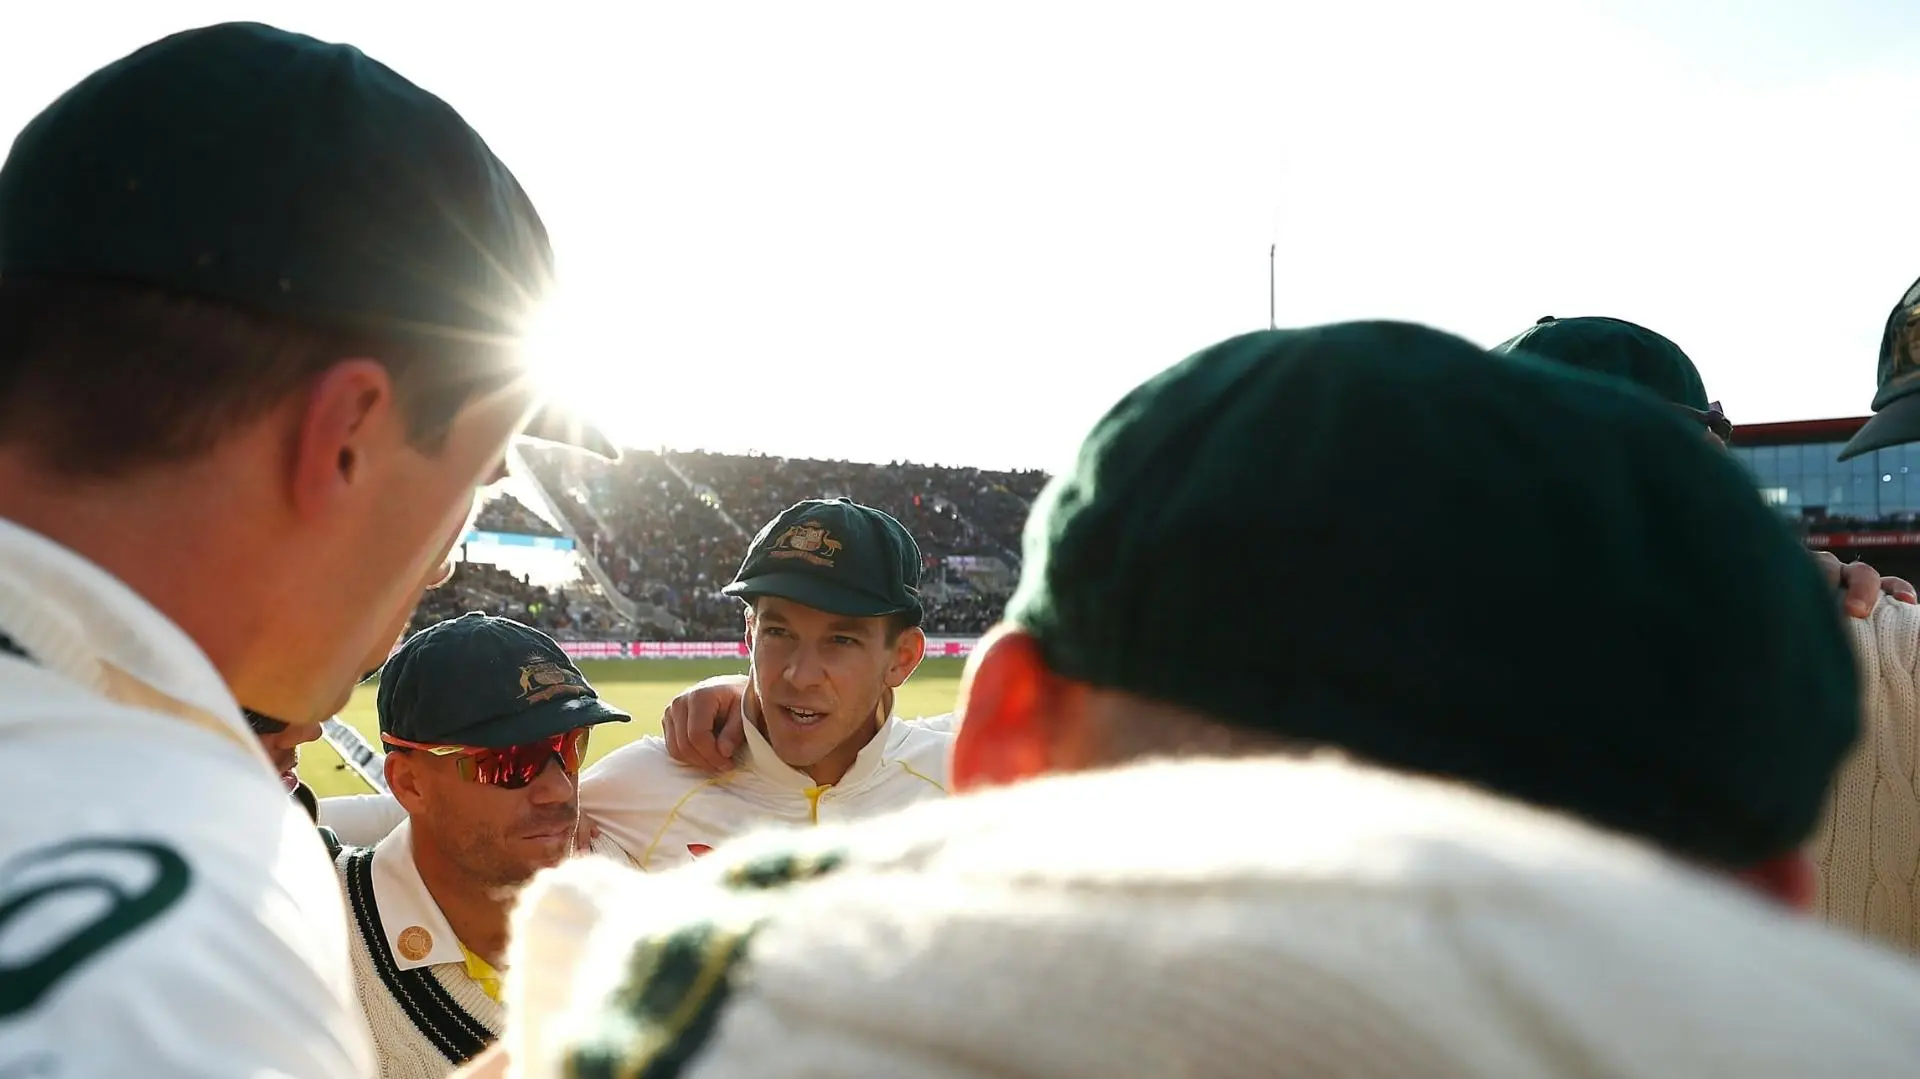 The Test: A New Era for Australia's Team_peliplat